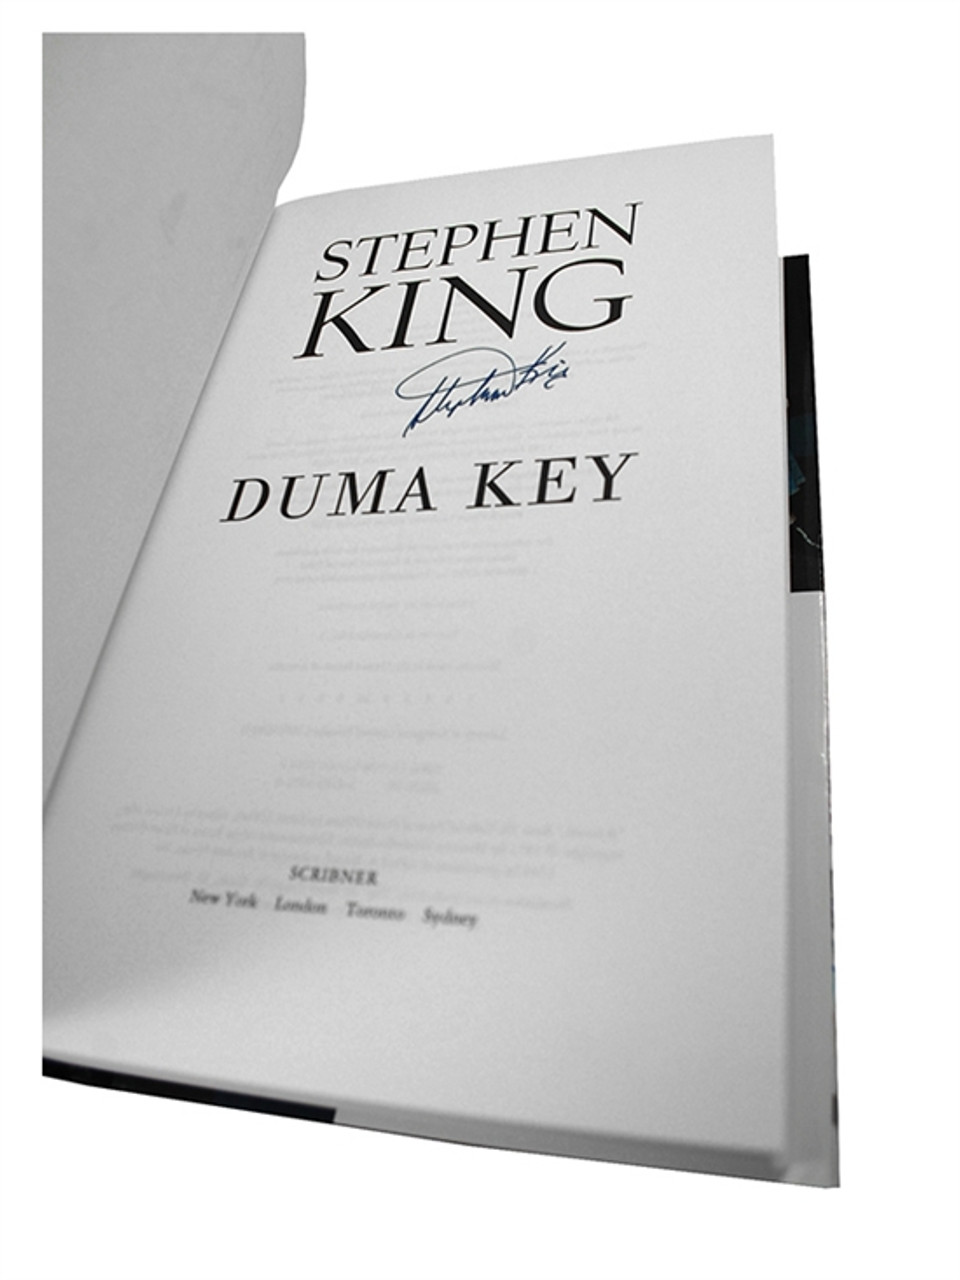 Stephen King "Duma Key" Signed First Edition dj/HC, Near Fine/Fine